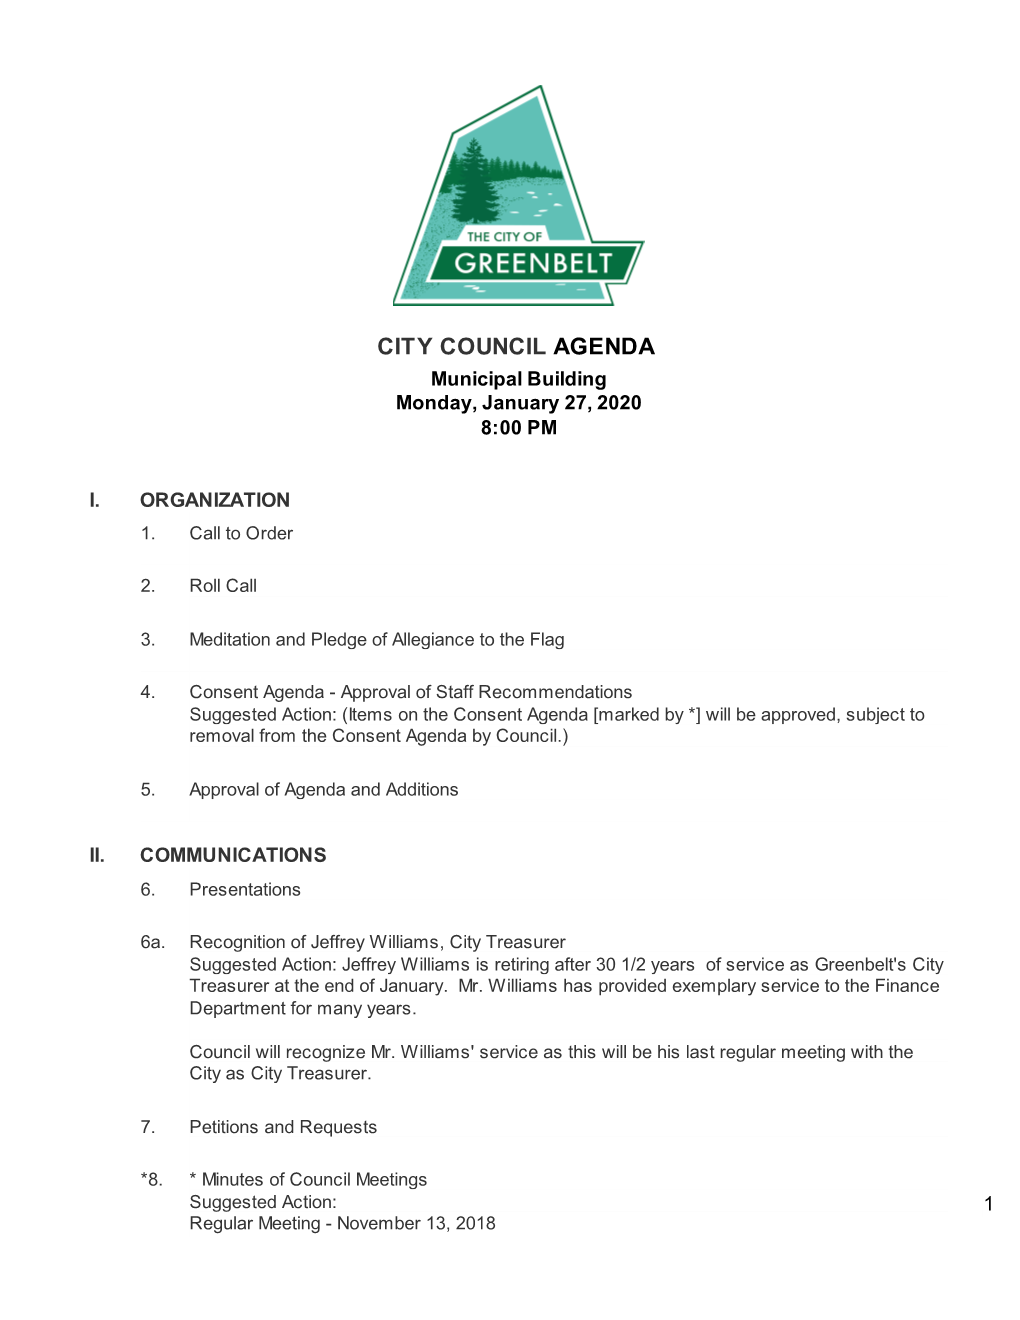 CITY COUNCIL AGENDA Municipal Building Monday, January 27, 2020 8:00 PM